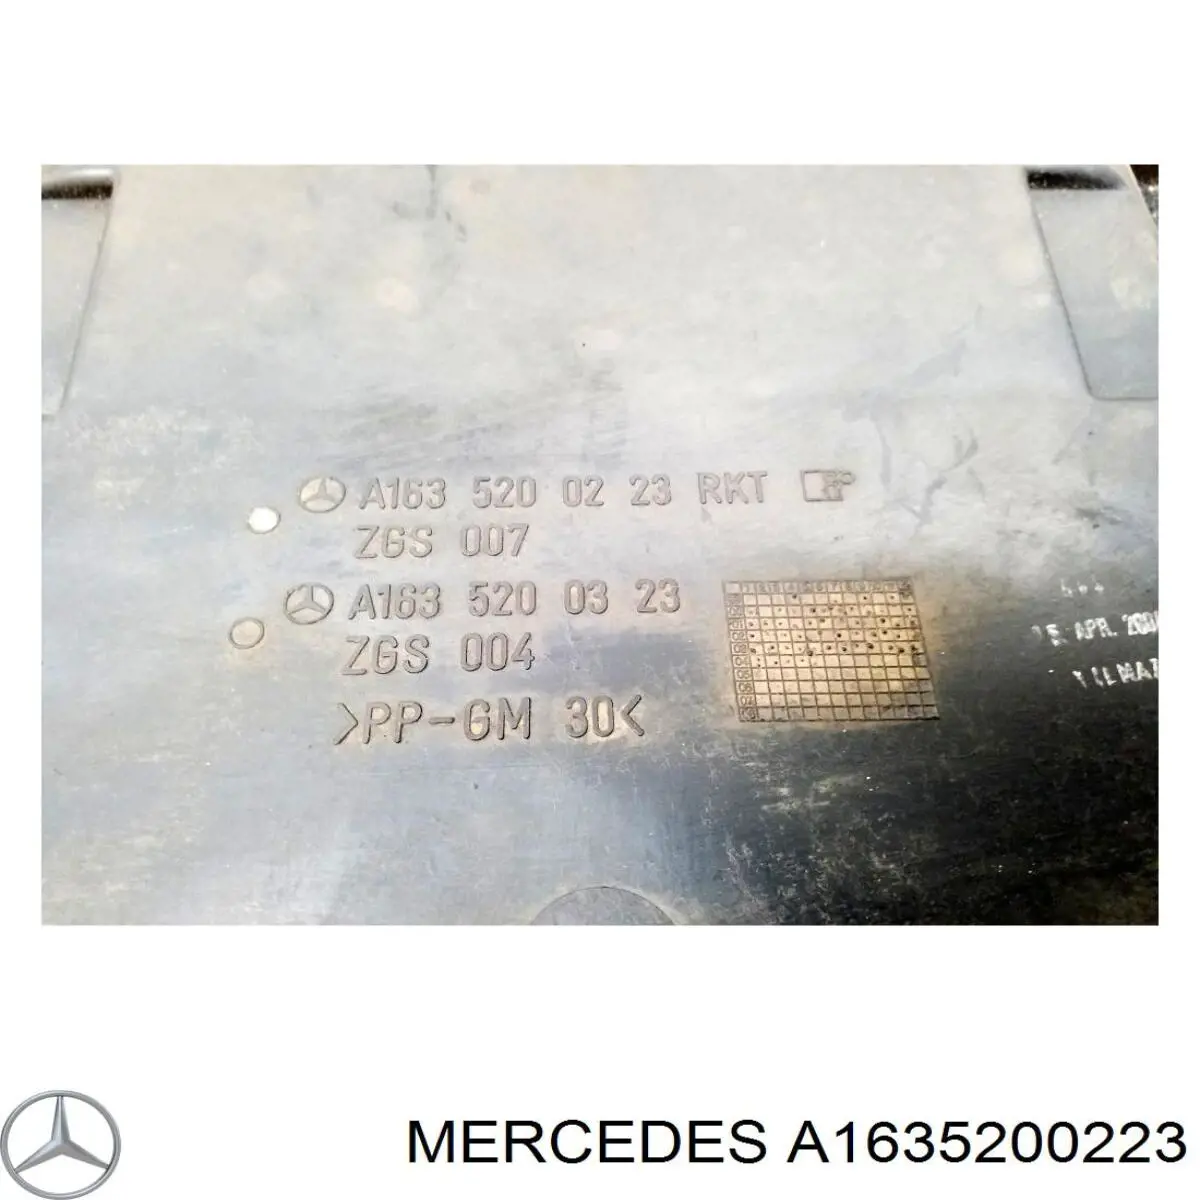 A1635200223 Mercedes захист коробки передач